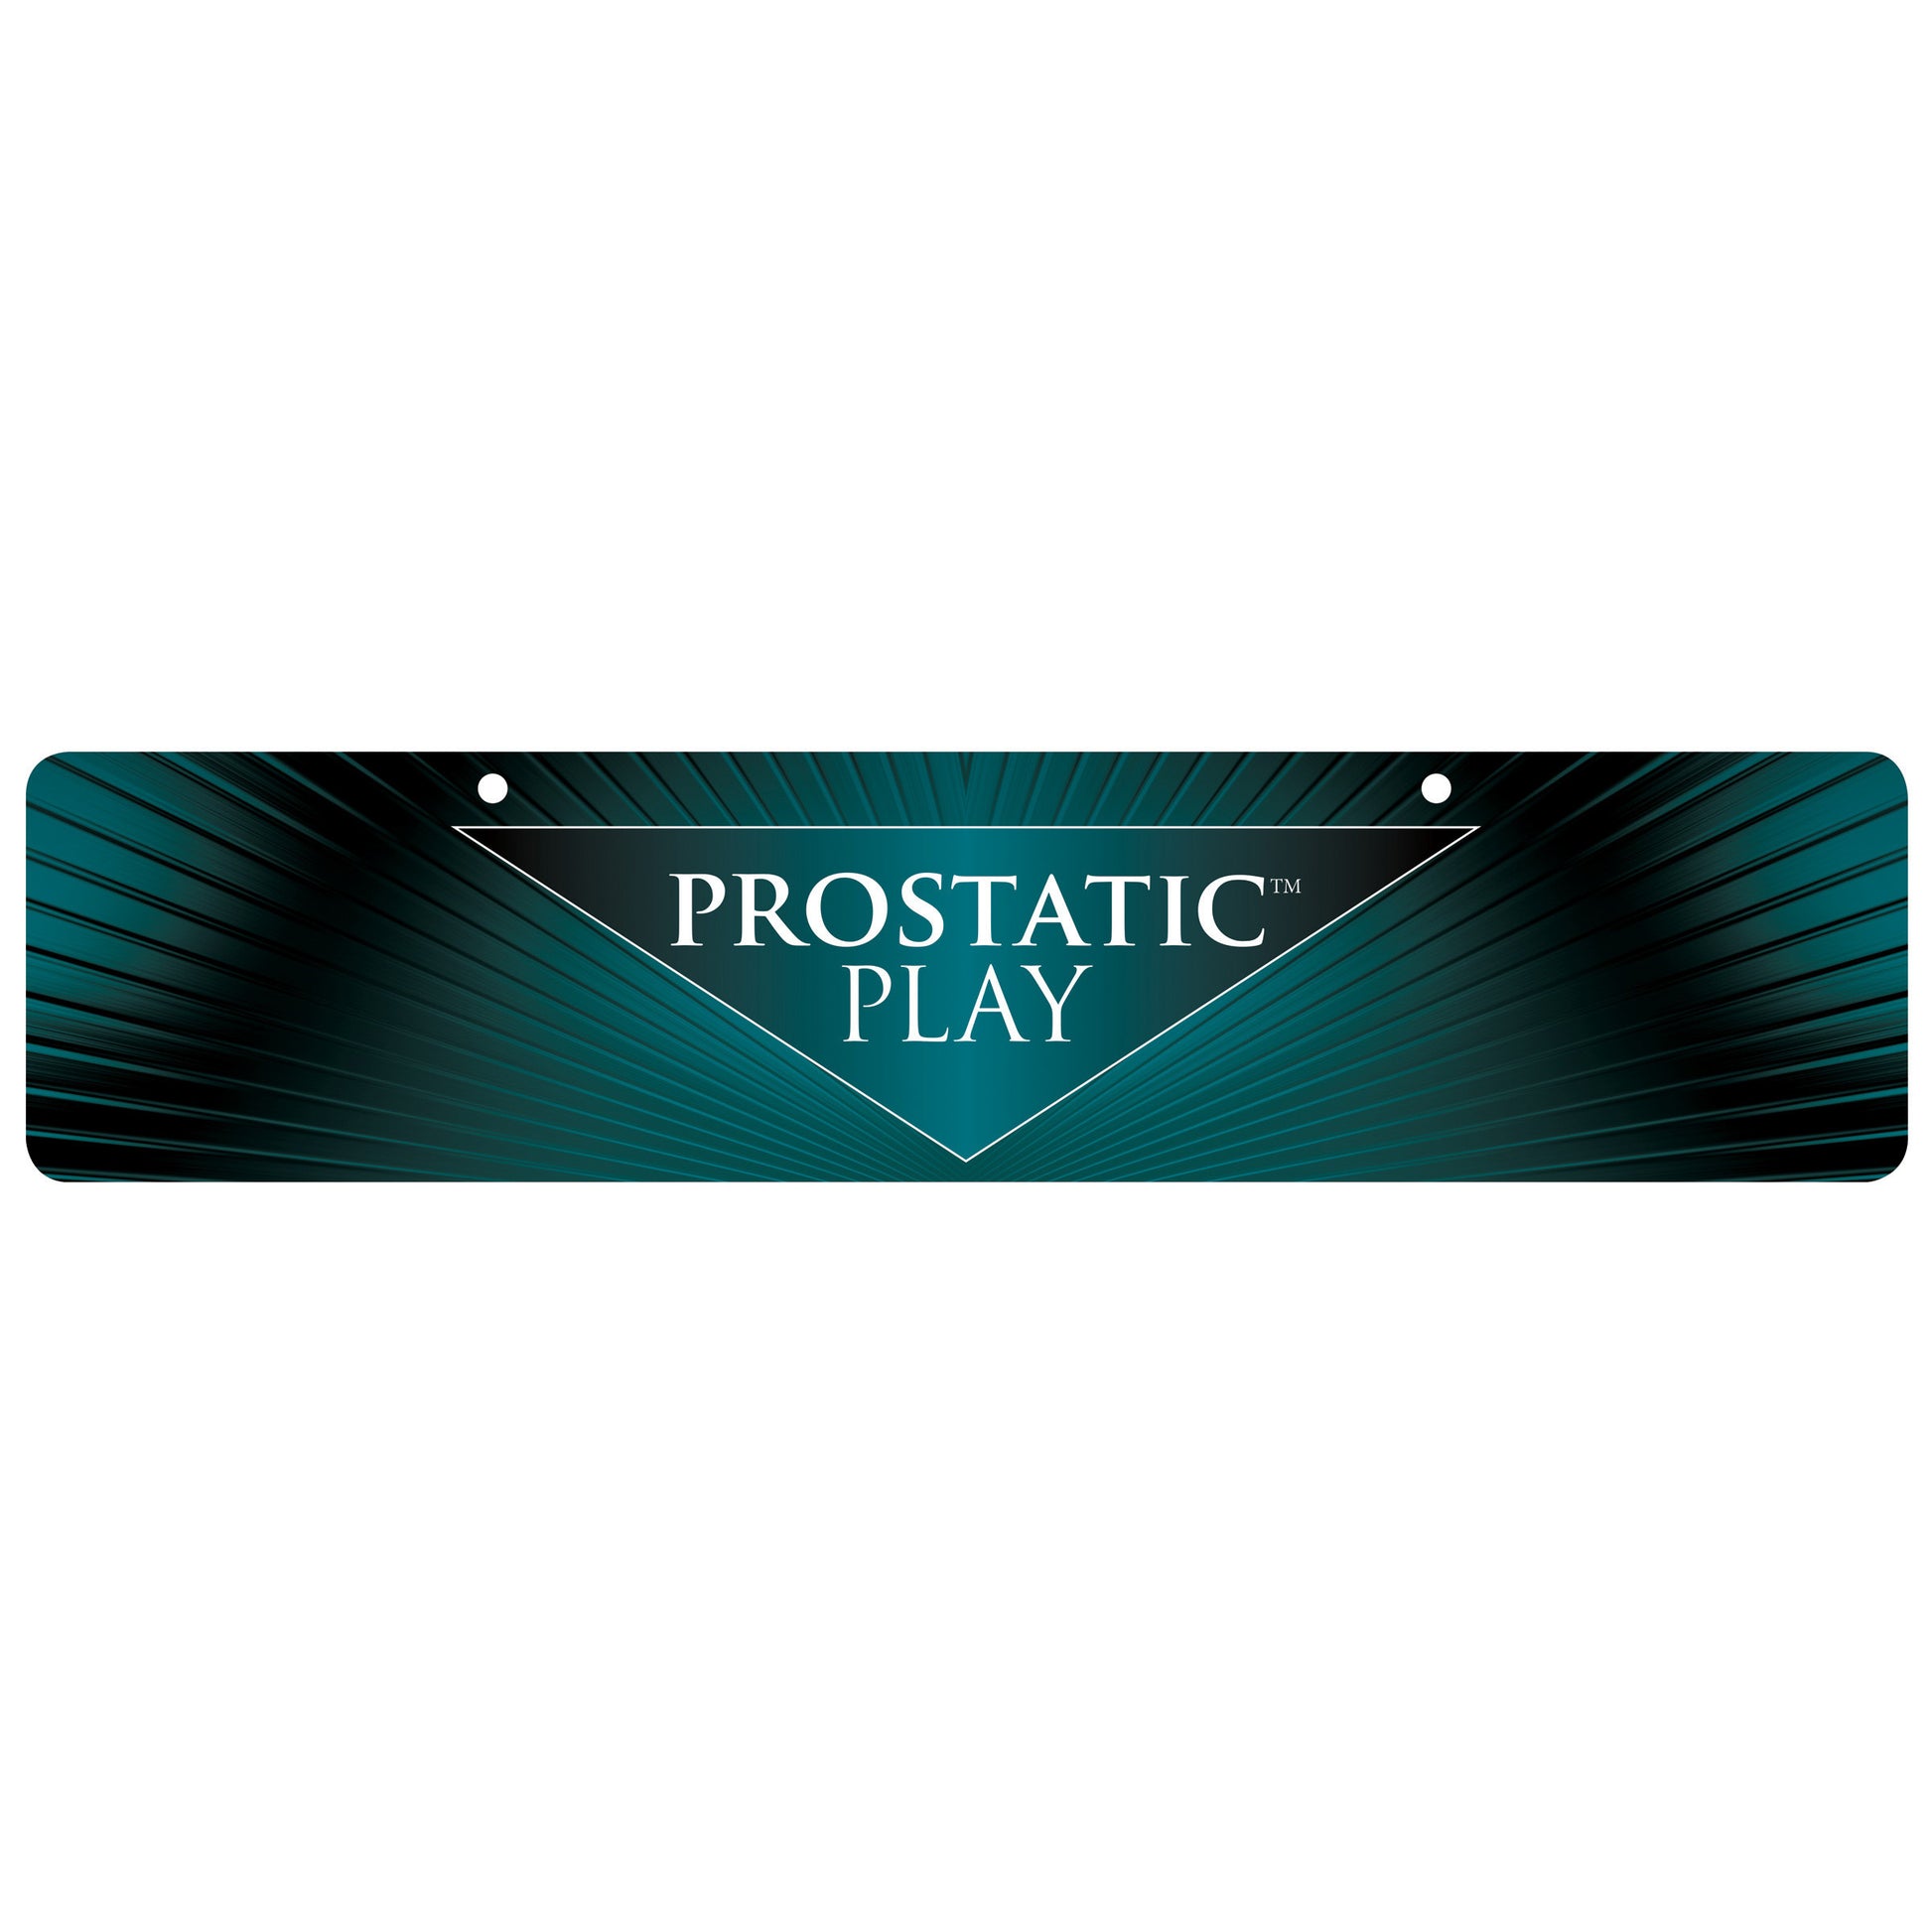 Prostatic Play Display Sign - UABDSM